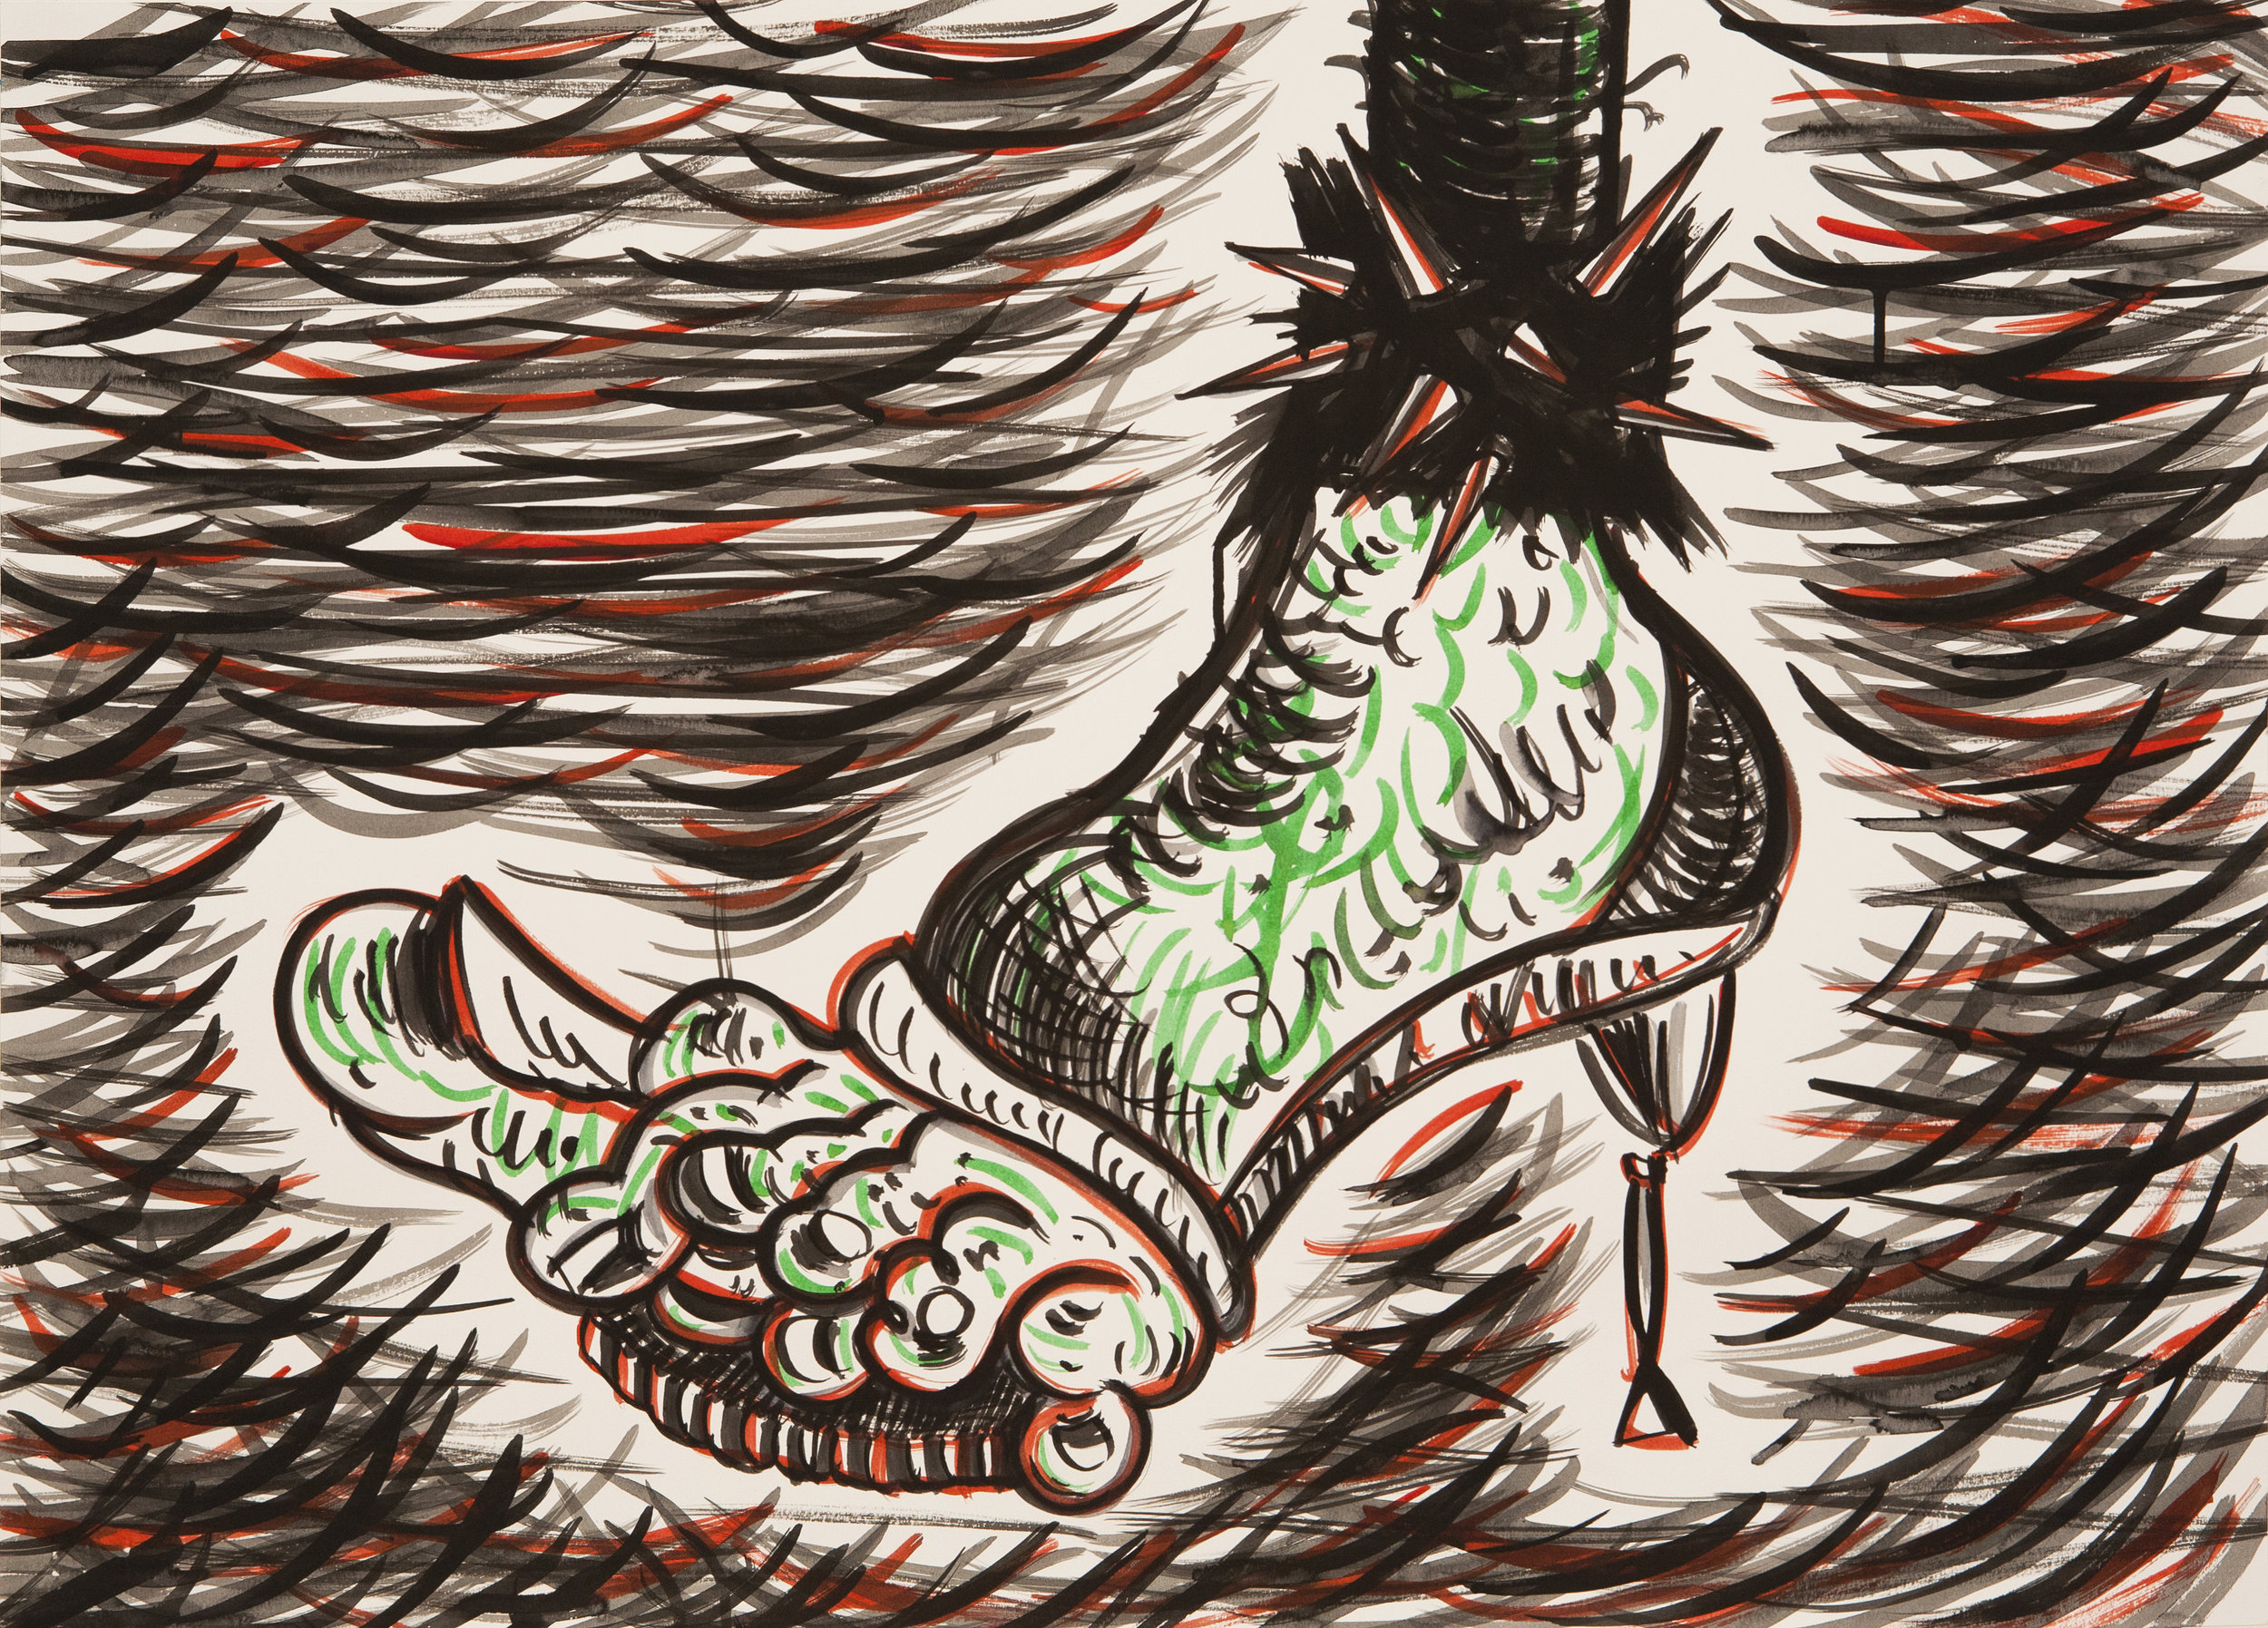  Sick Feet Barbarella, 2016 Ink on Paper. 50x70cm 